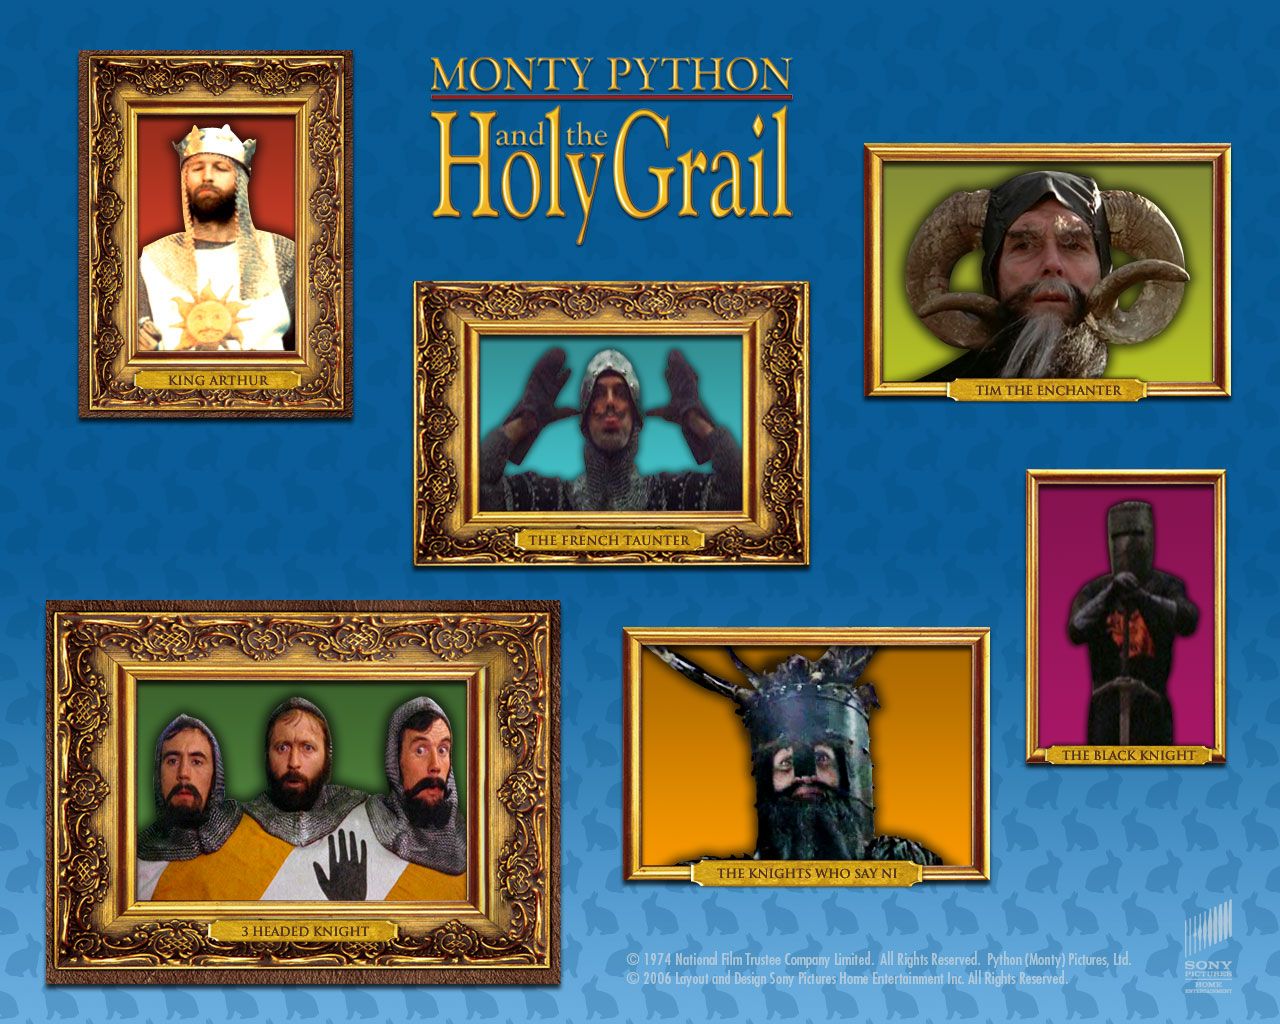 Monty Python - The Best of British Comedy Wallpaper (33036165 ...